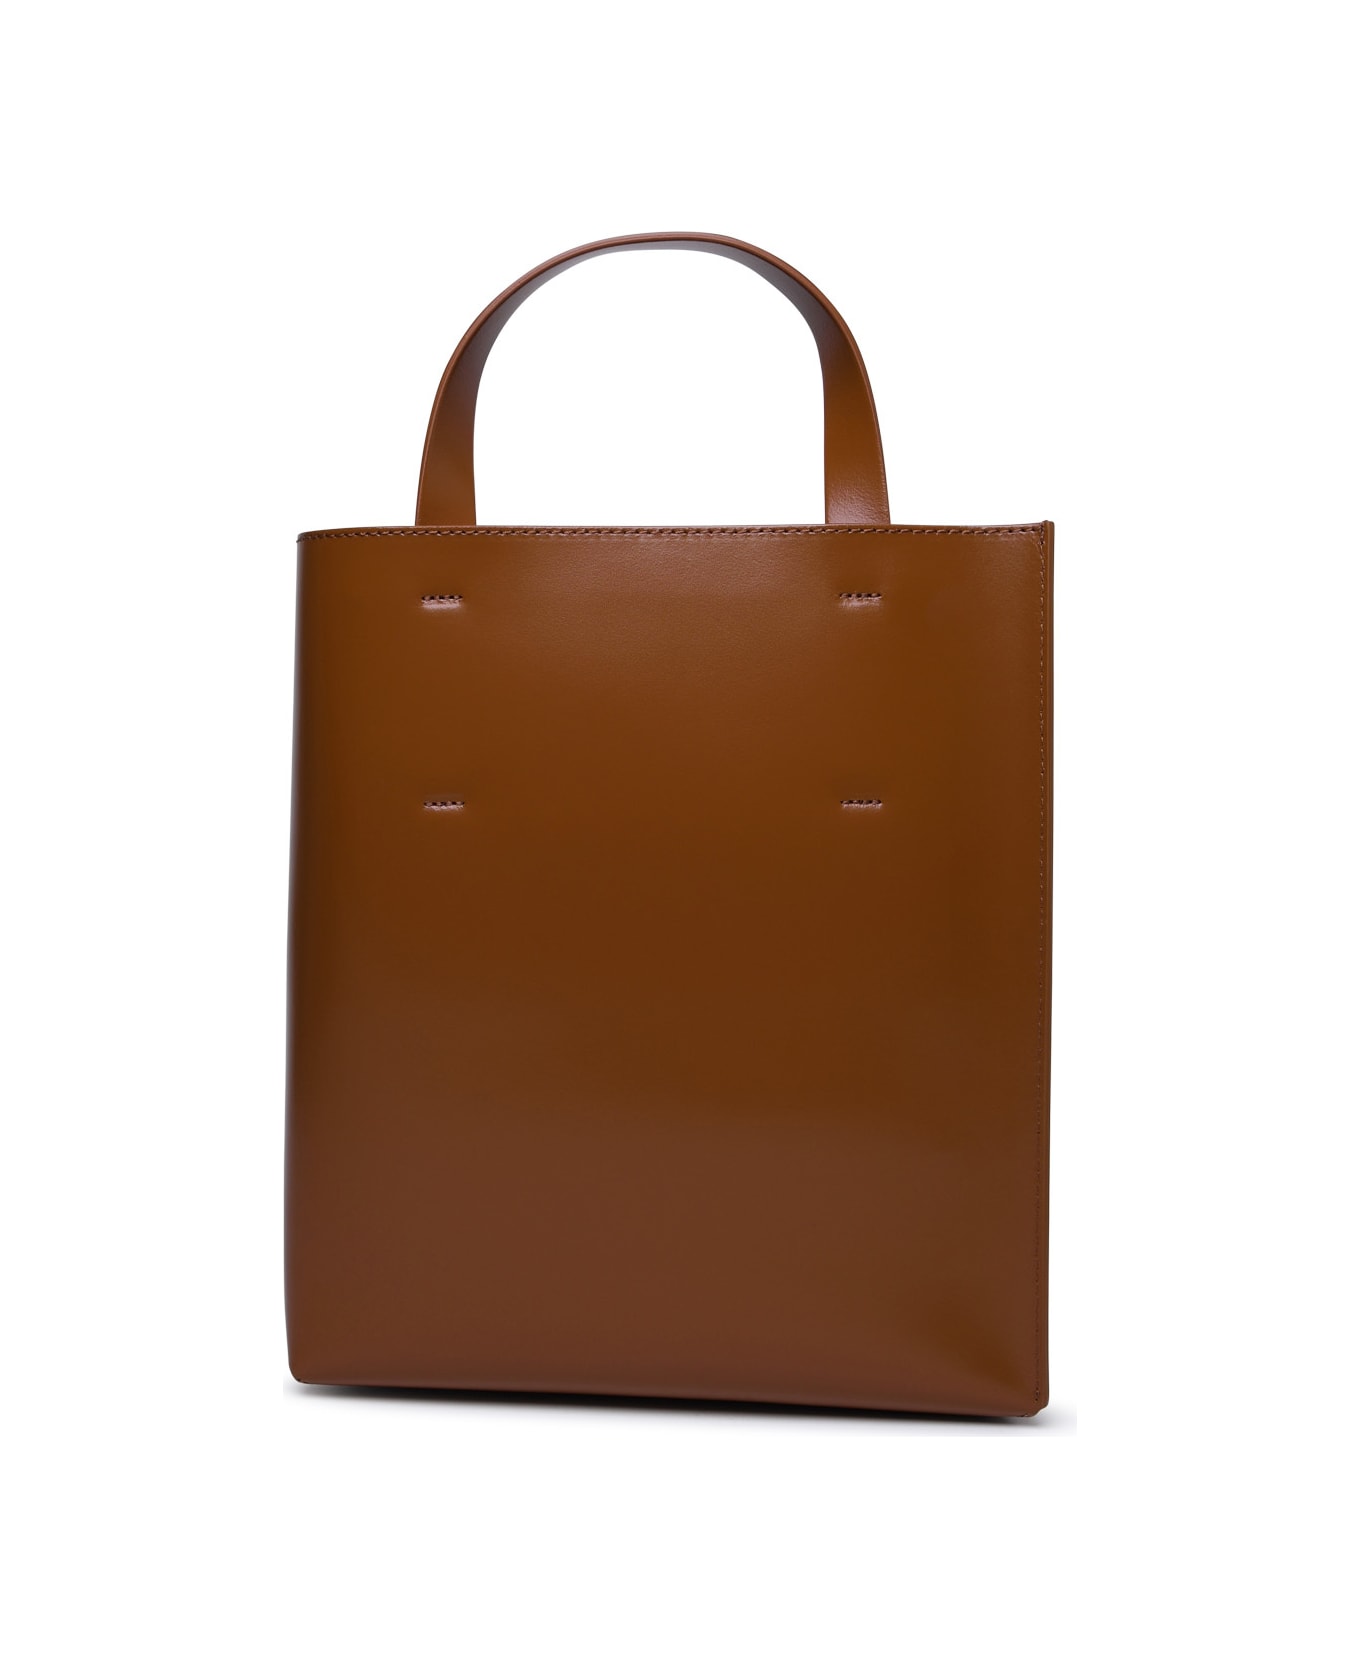 Marni Small 'museo' Brown Leather Bag - Brown